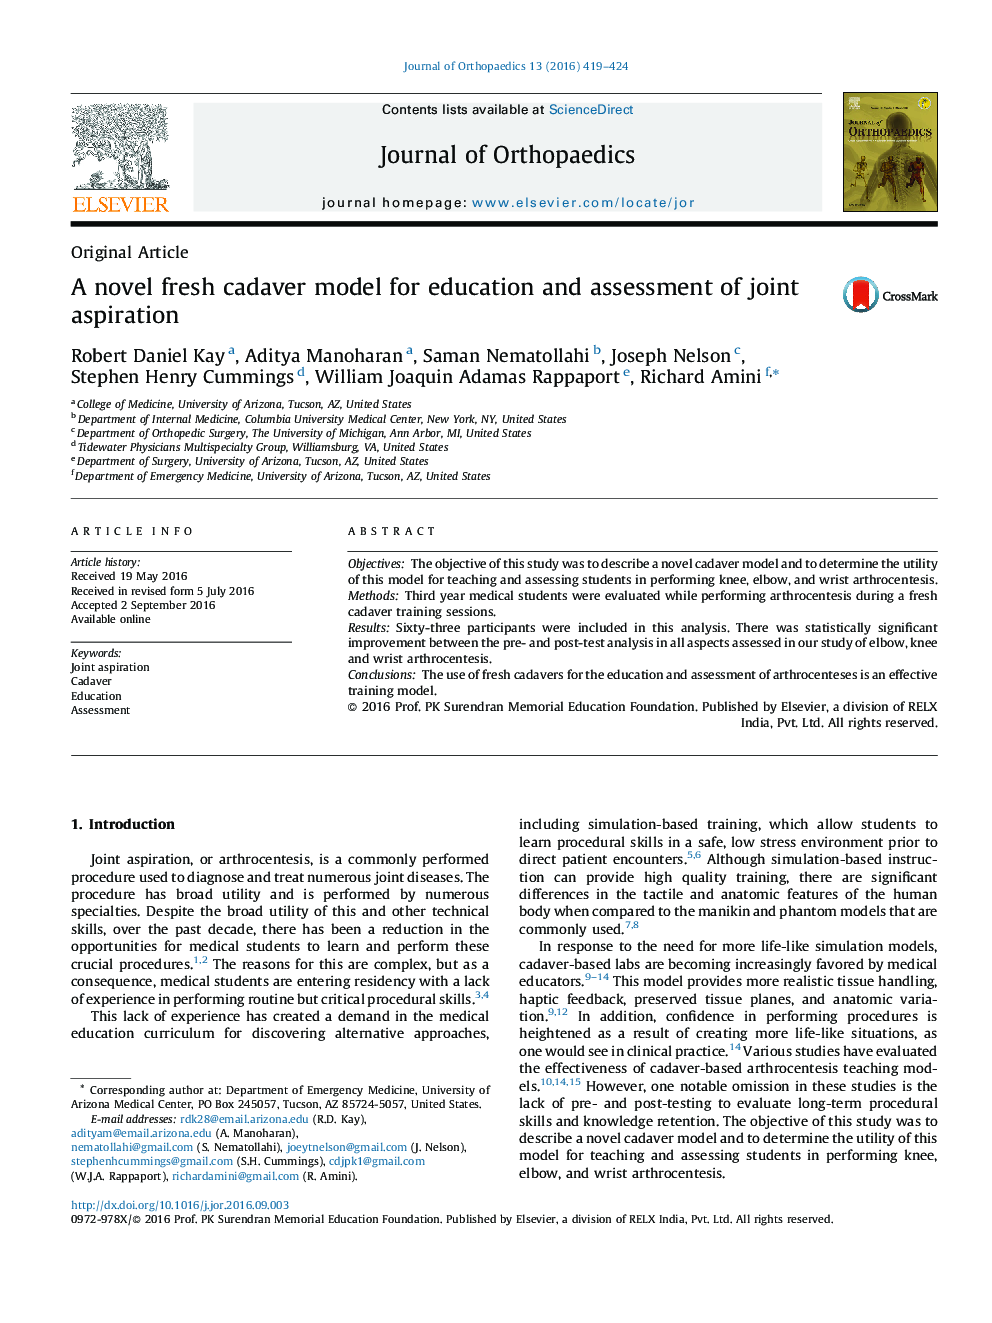 A novel fresh cadaver model for education and assessment of joint aspiration